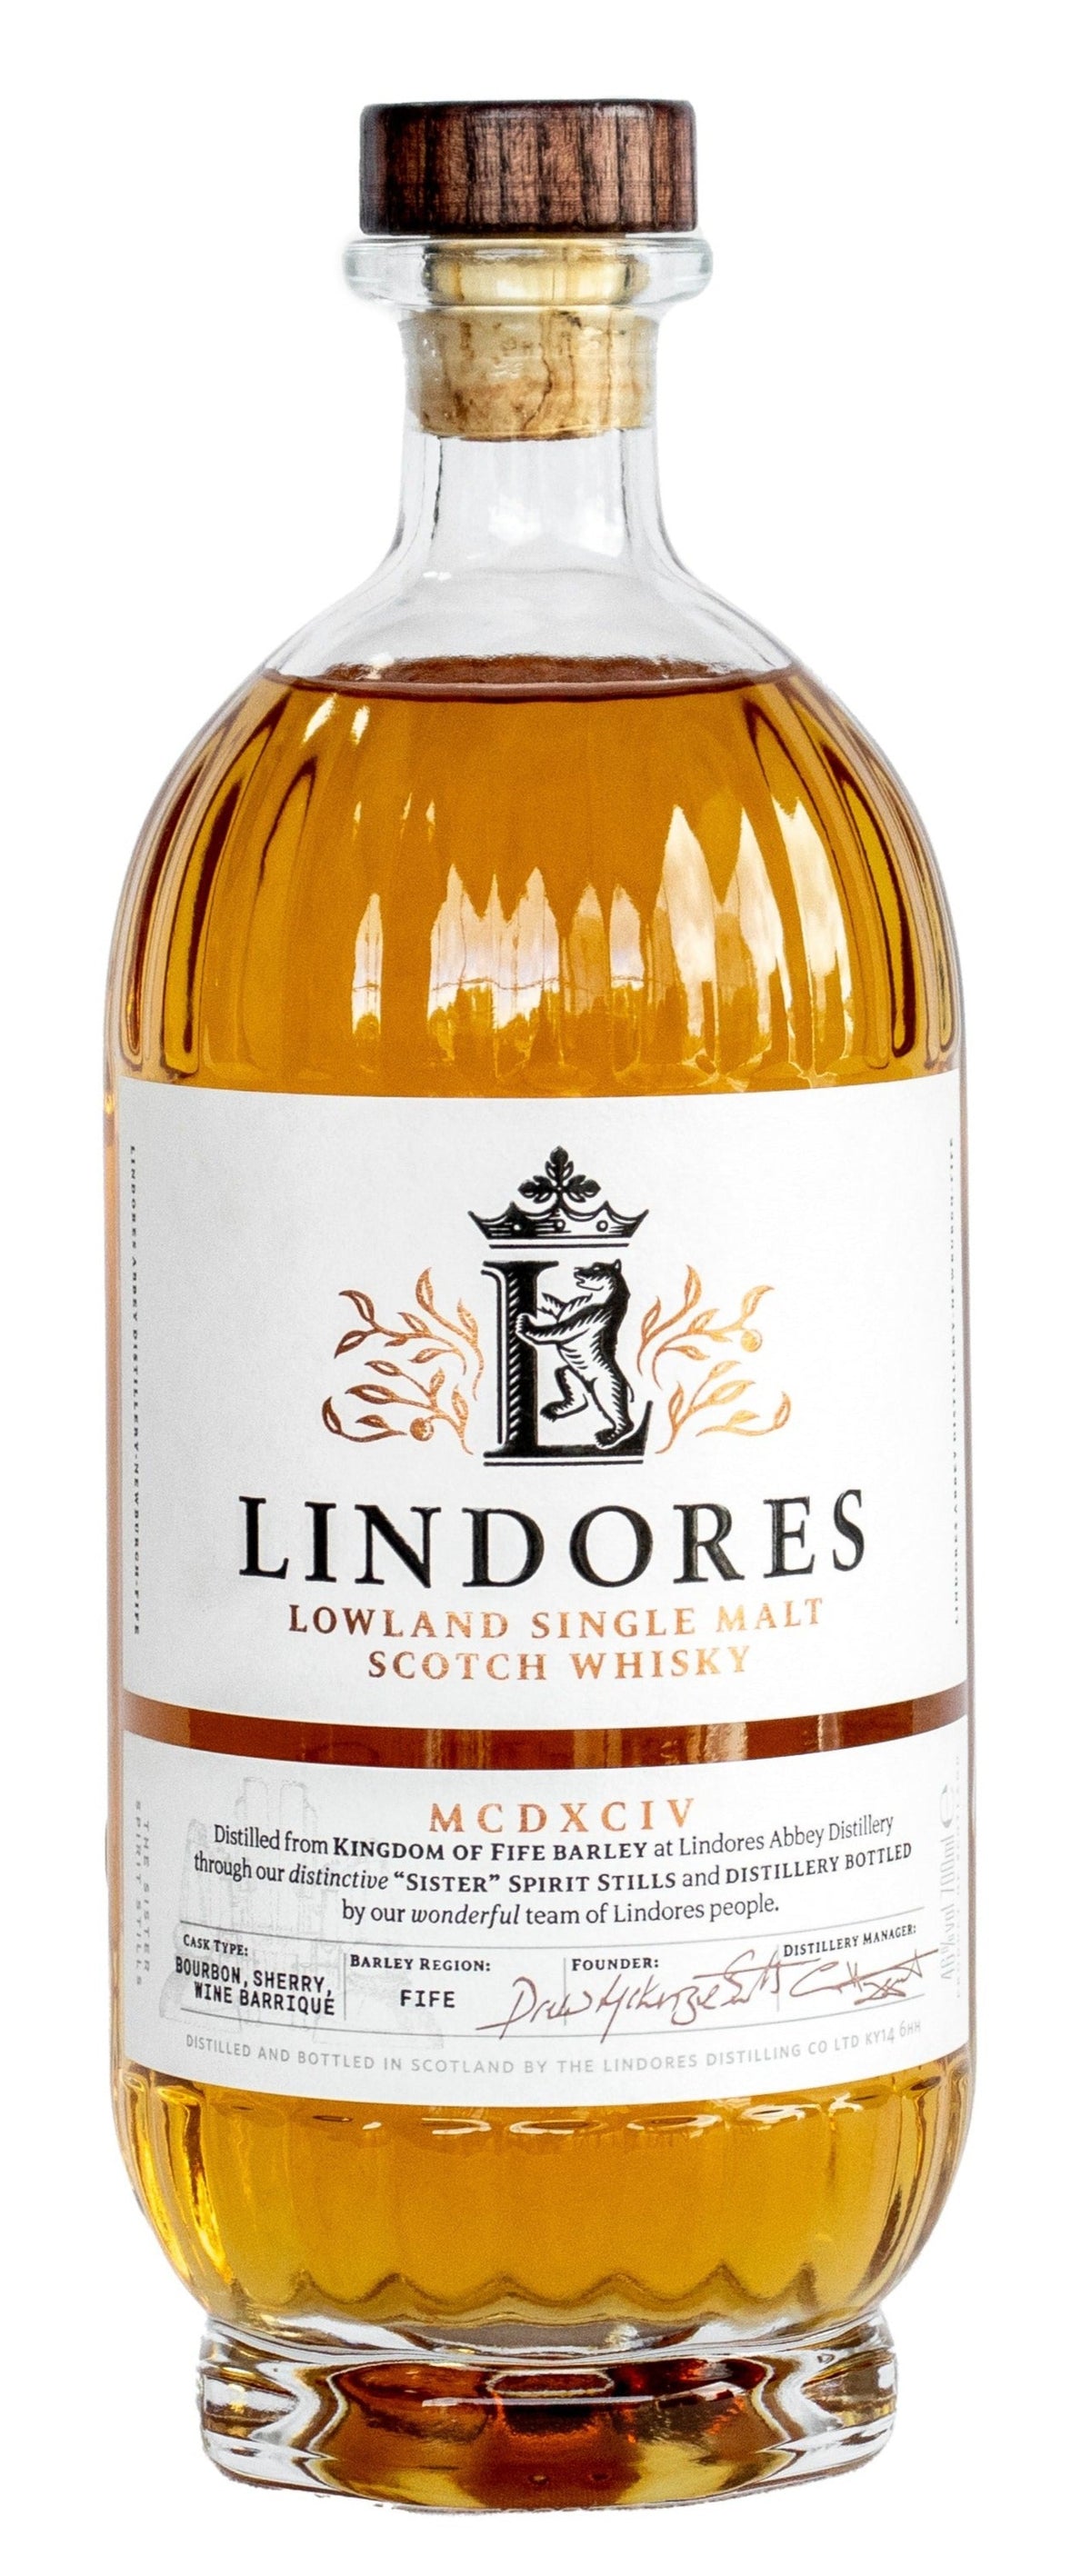 Lindores Abbey Distillery MCDXCIV (1494) Single Malt Scotch Whisky, 46.0%